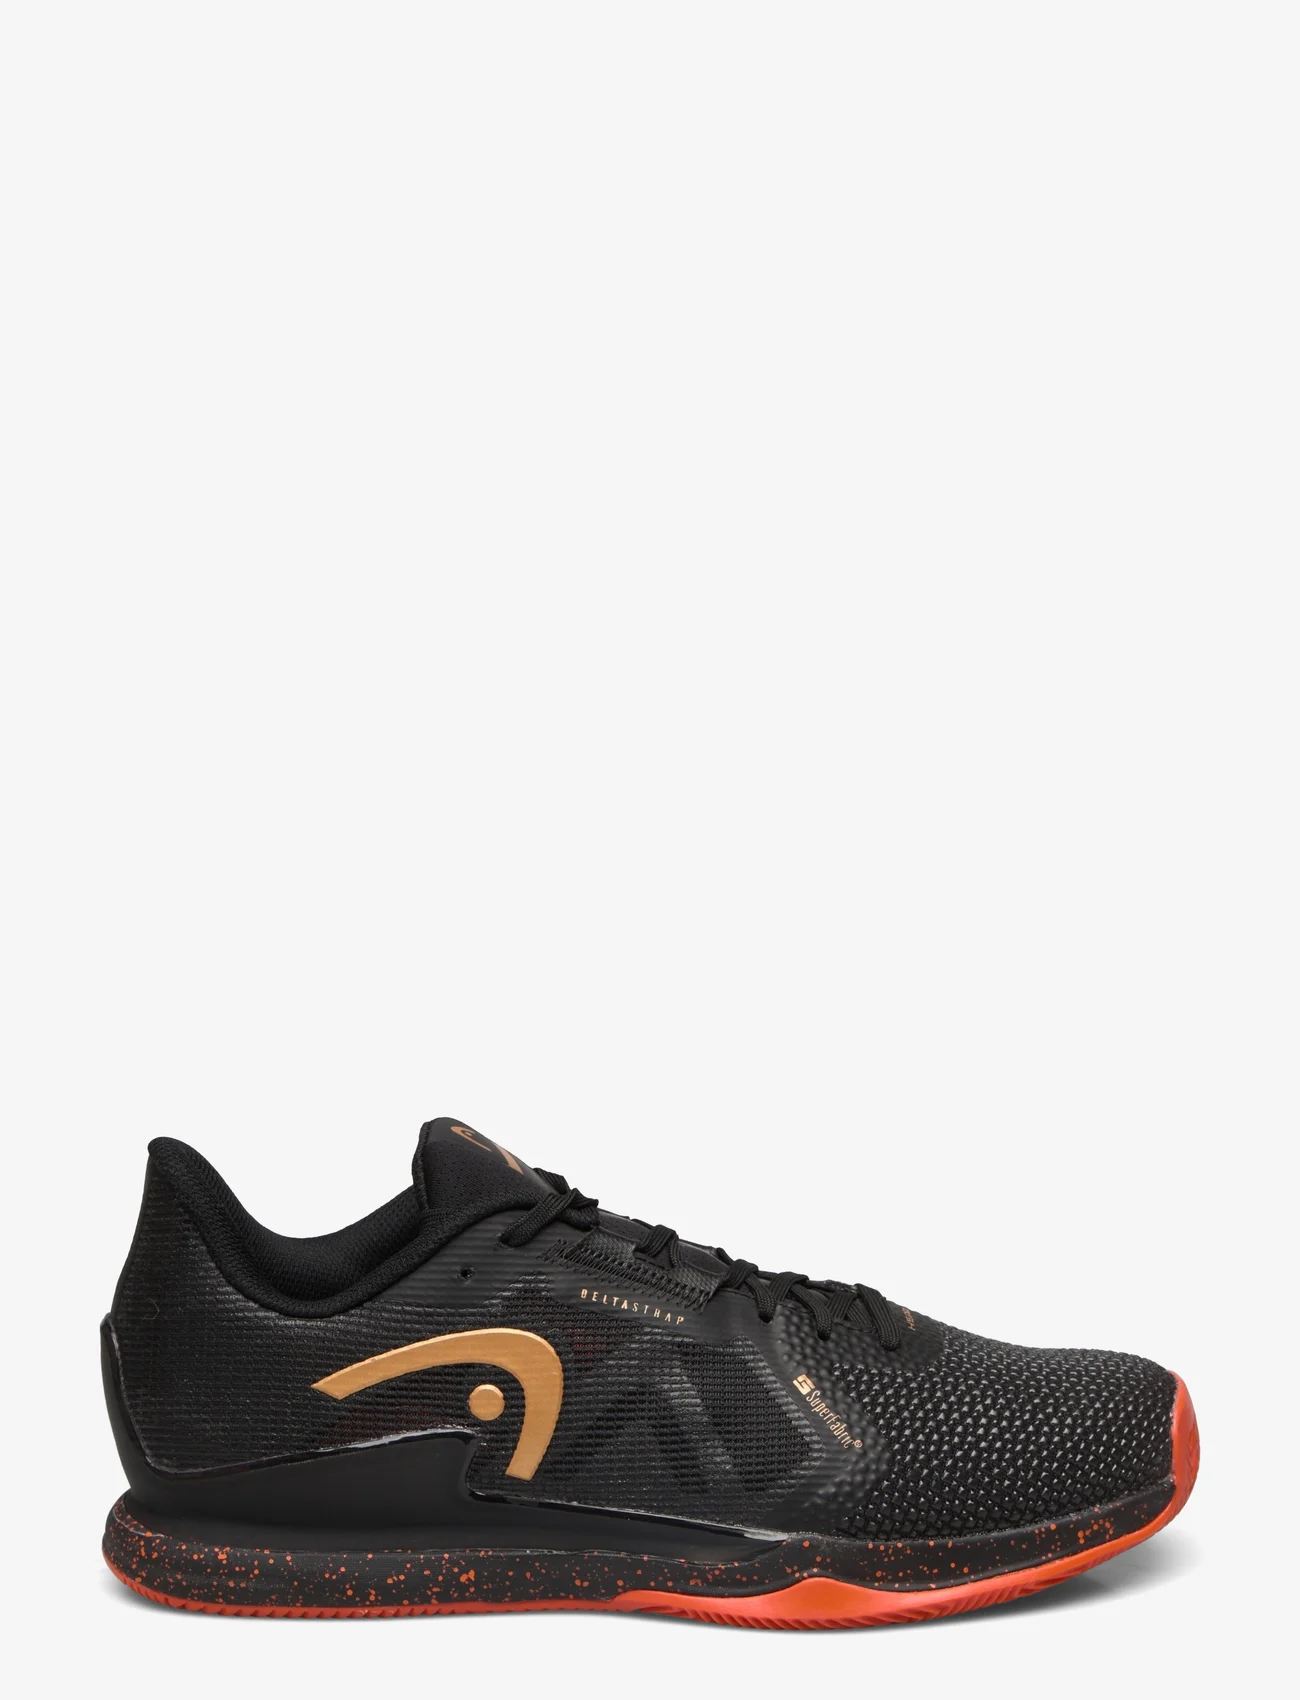 Head - HEAD Sprint Pro 3.5 SF Clay Tennis Shoes - racketsports shoes - black/orange - 1